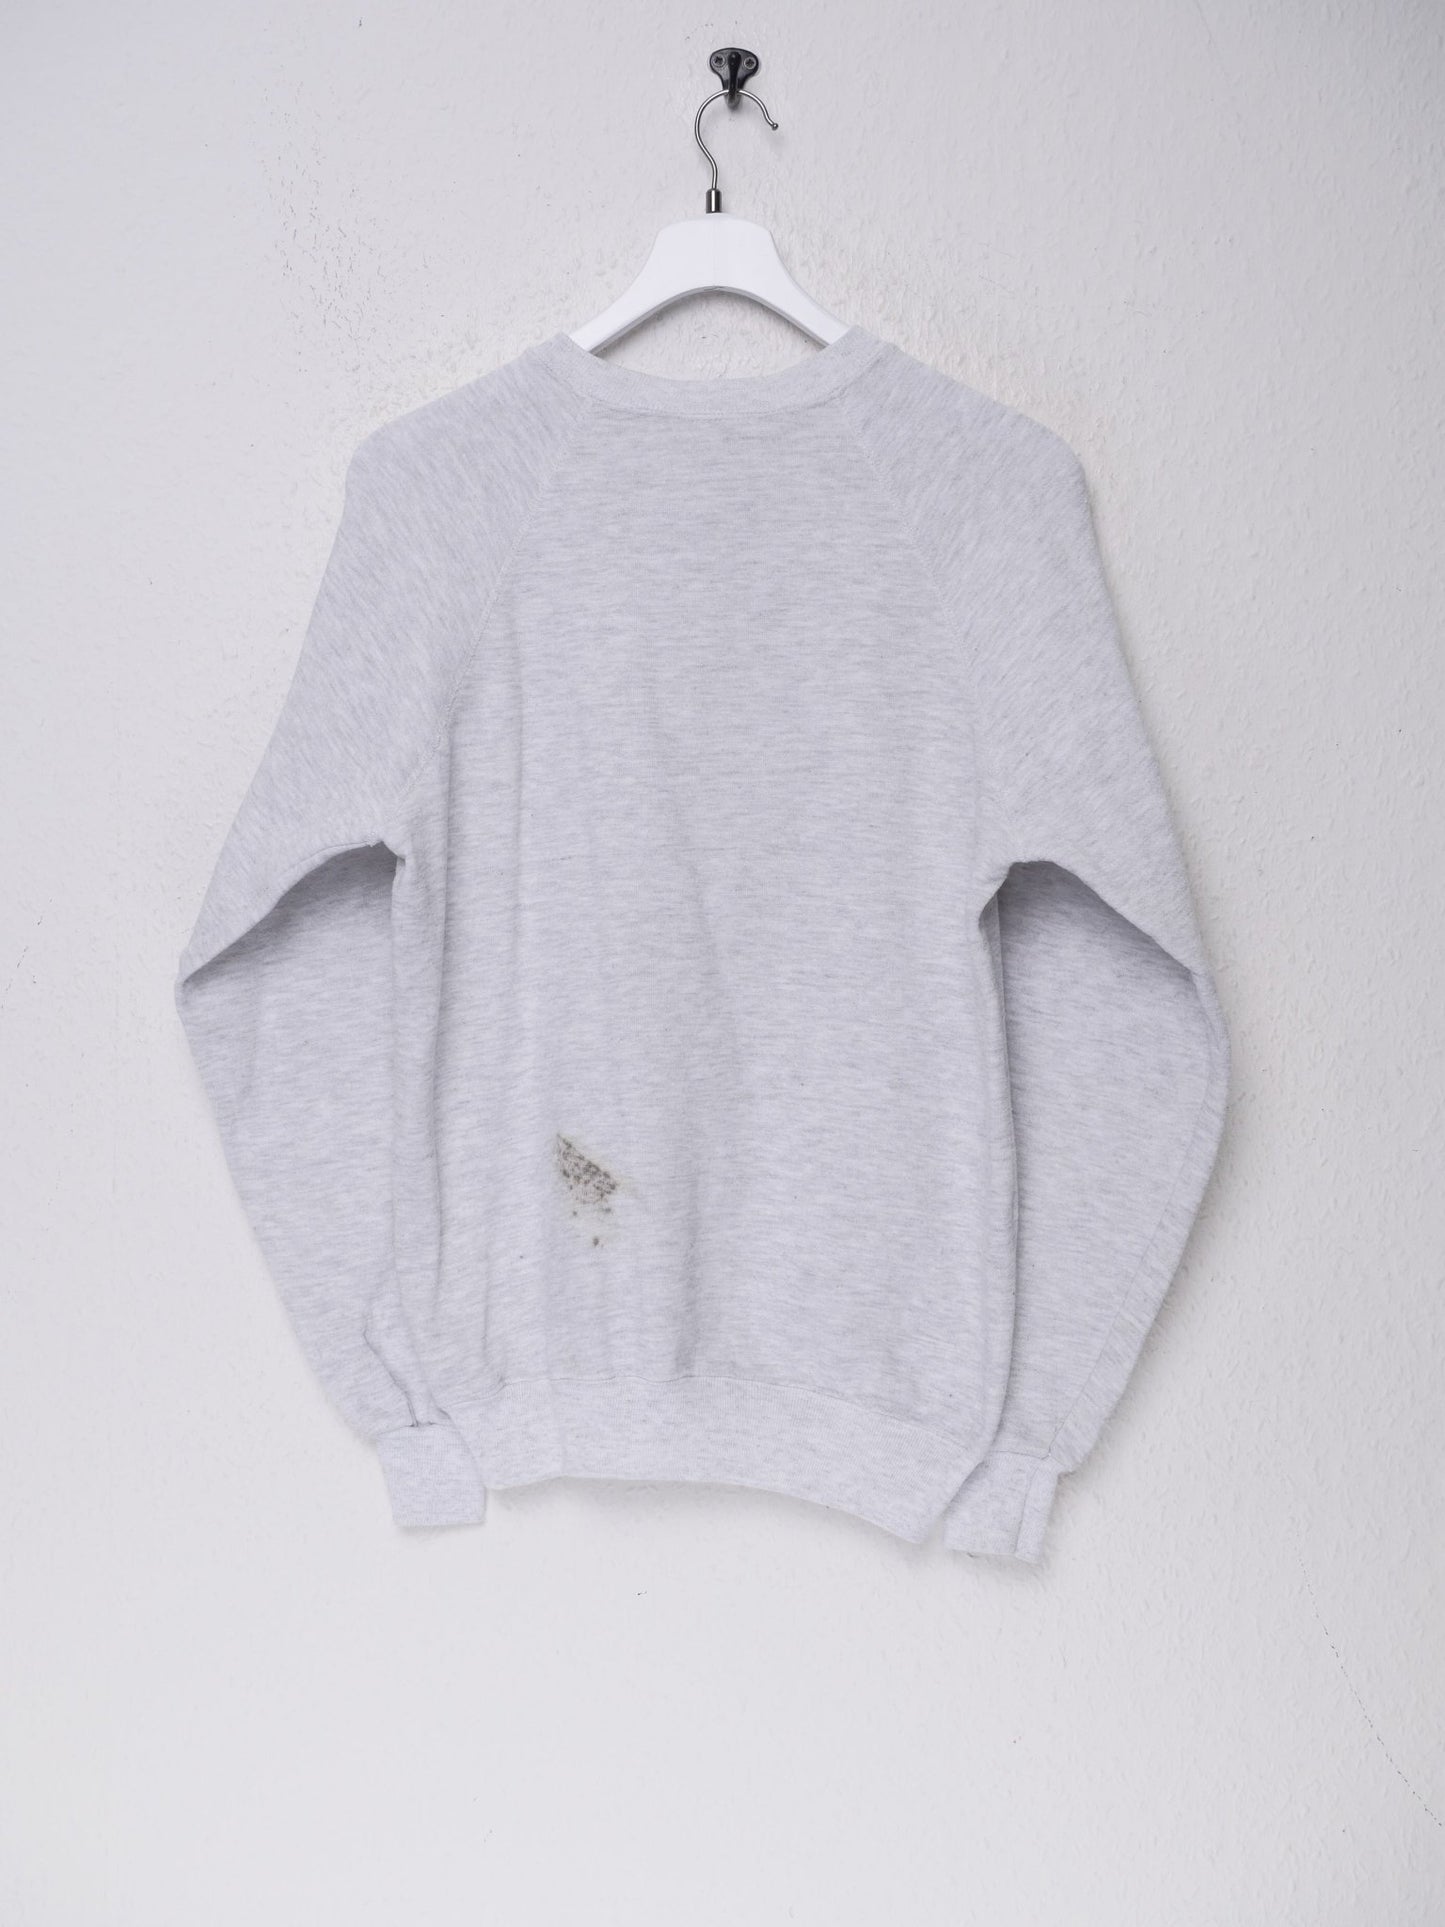 Lee 'Bah Humbug' printed Graphic grey Sweater - Peeces